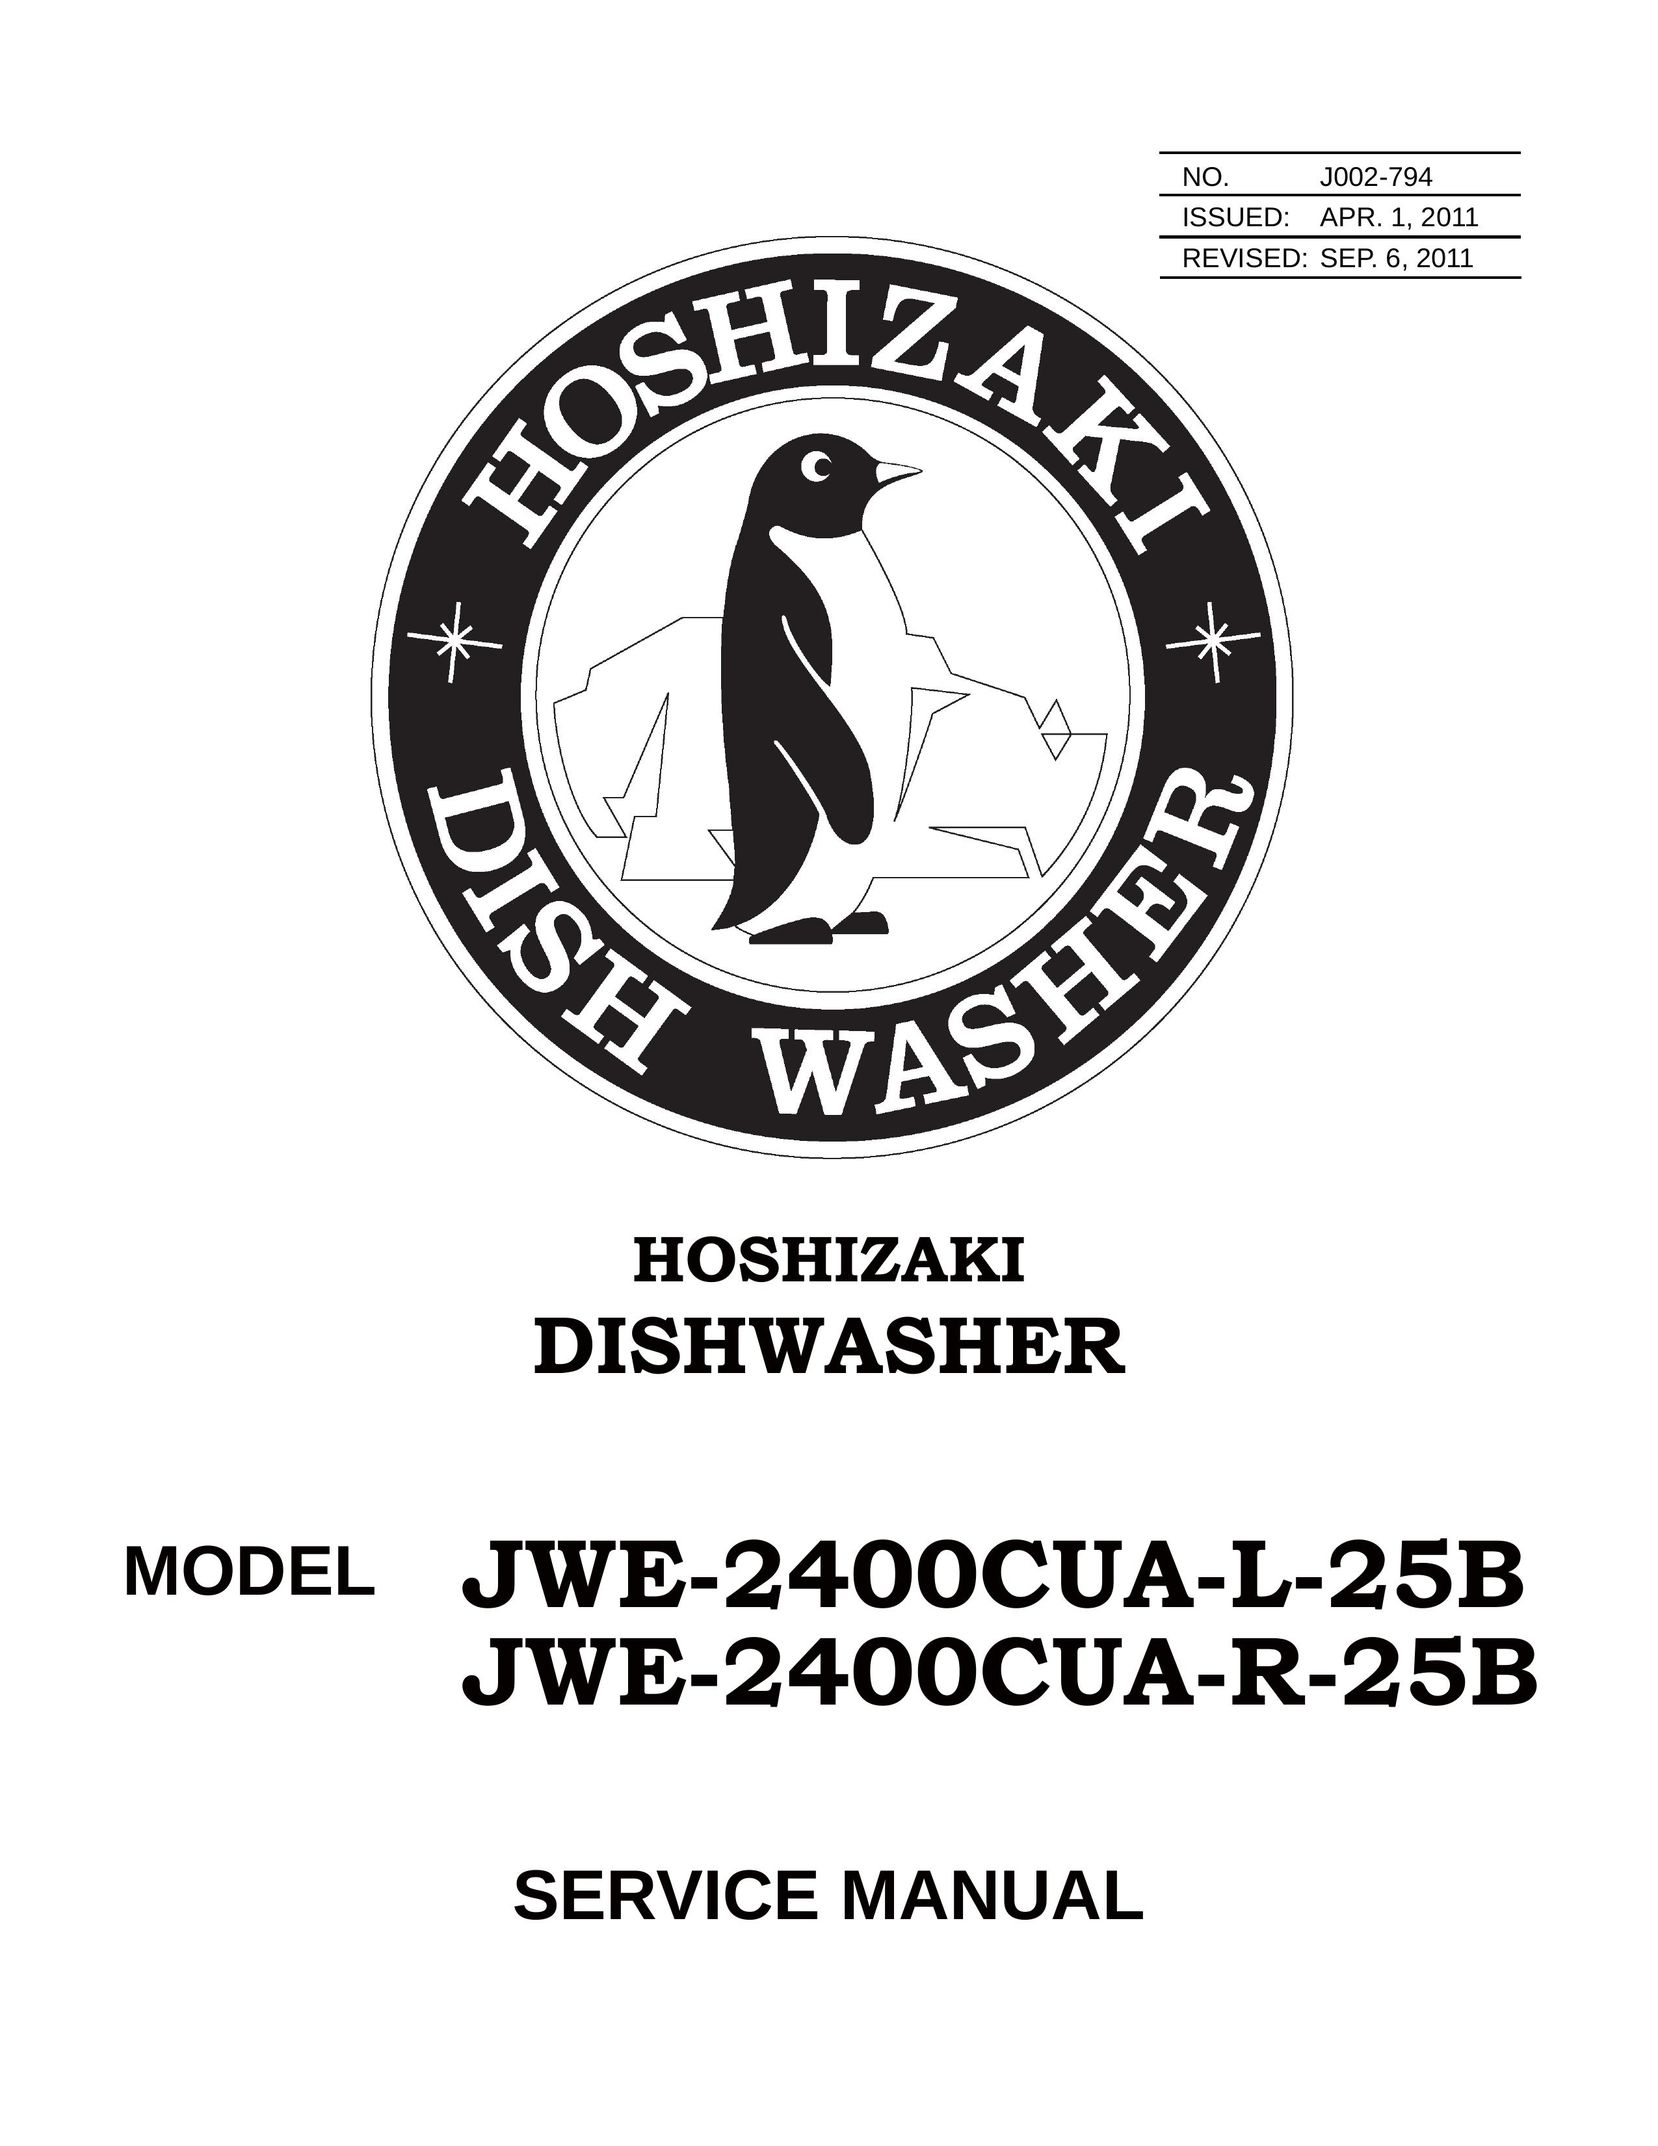 Hoshizaki JWE-2400CUA-R-25B Dishwasher User Manual